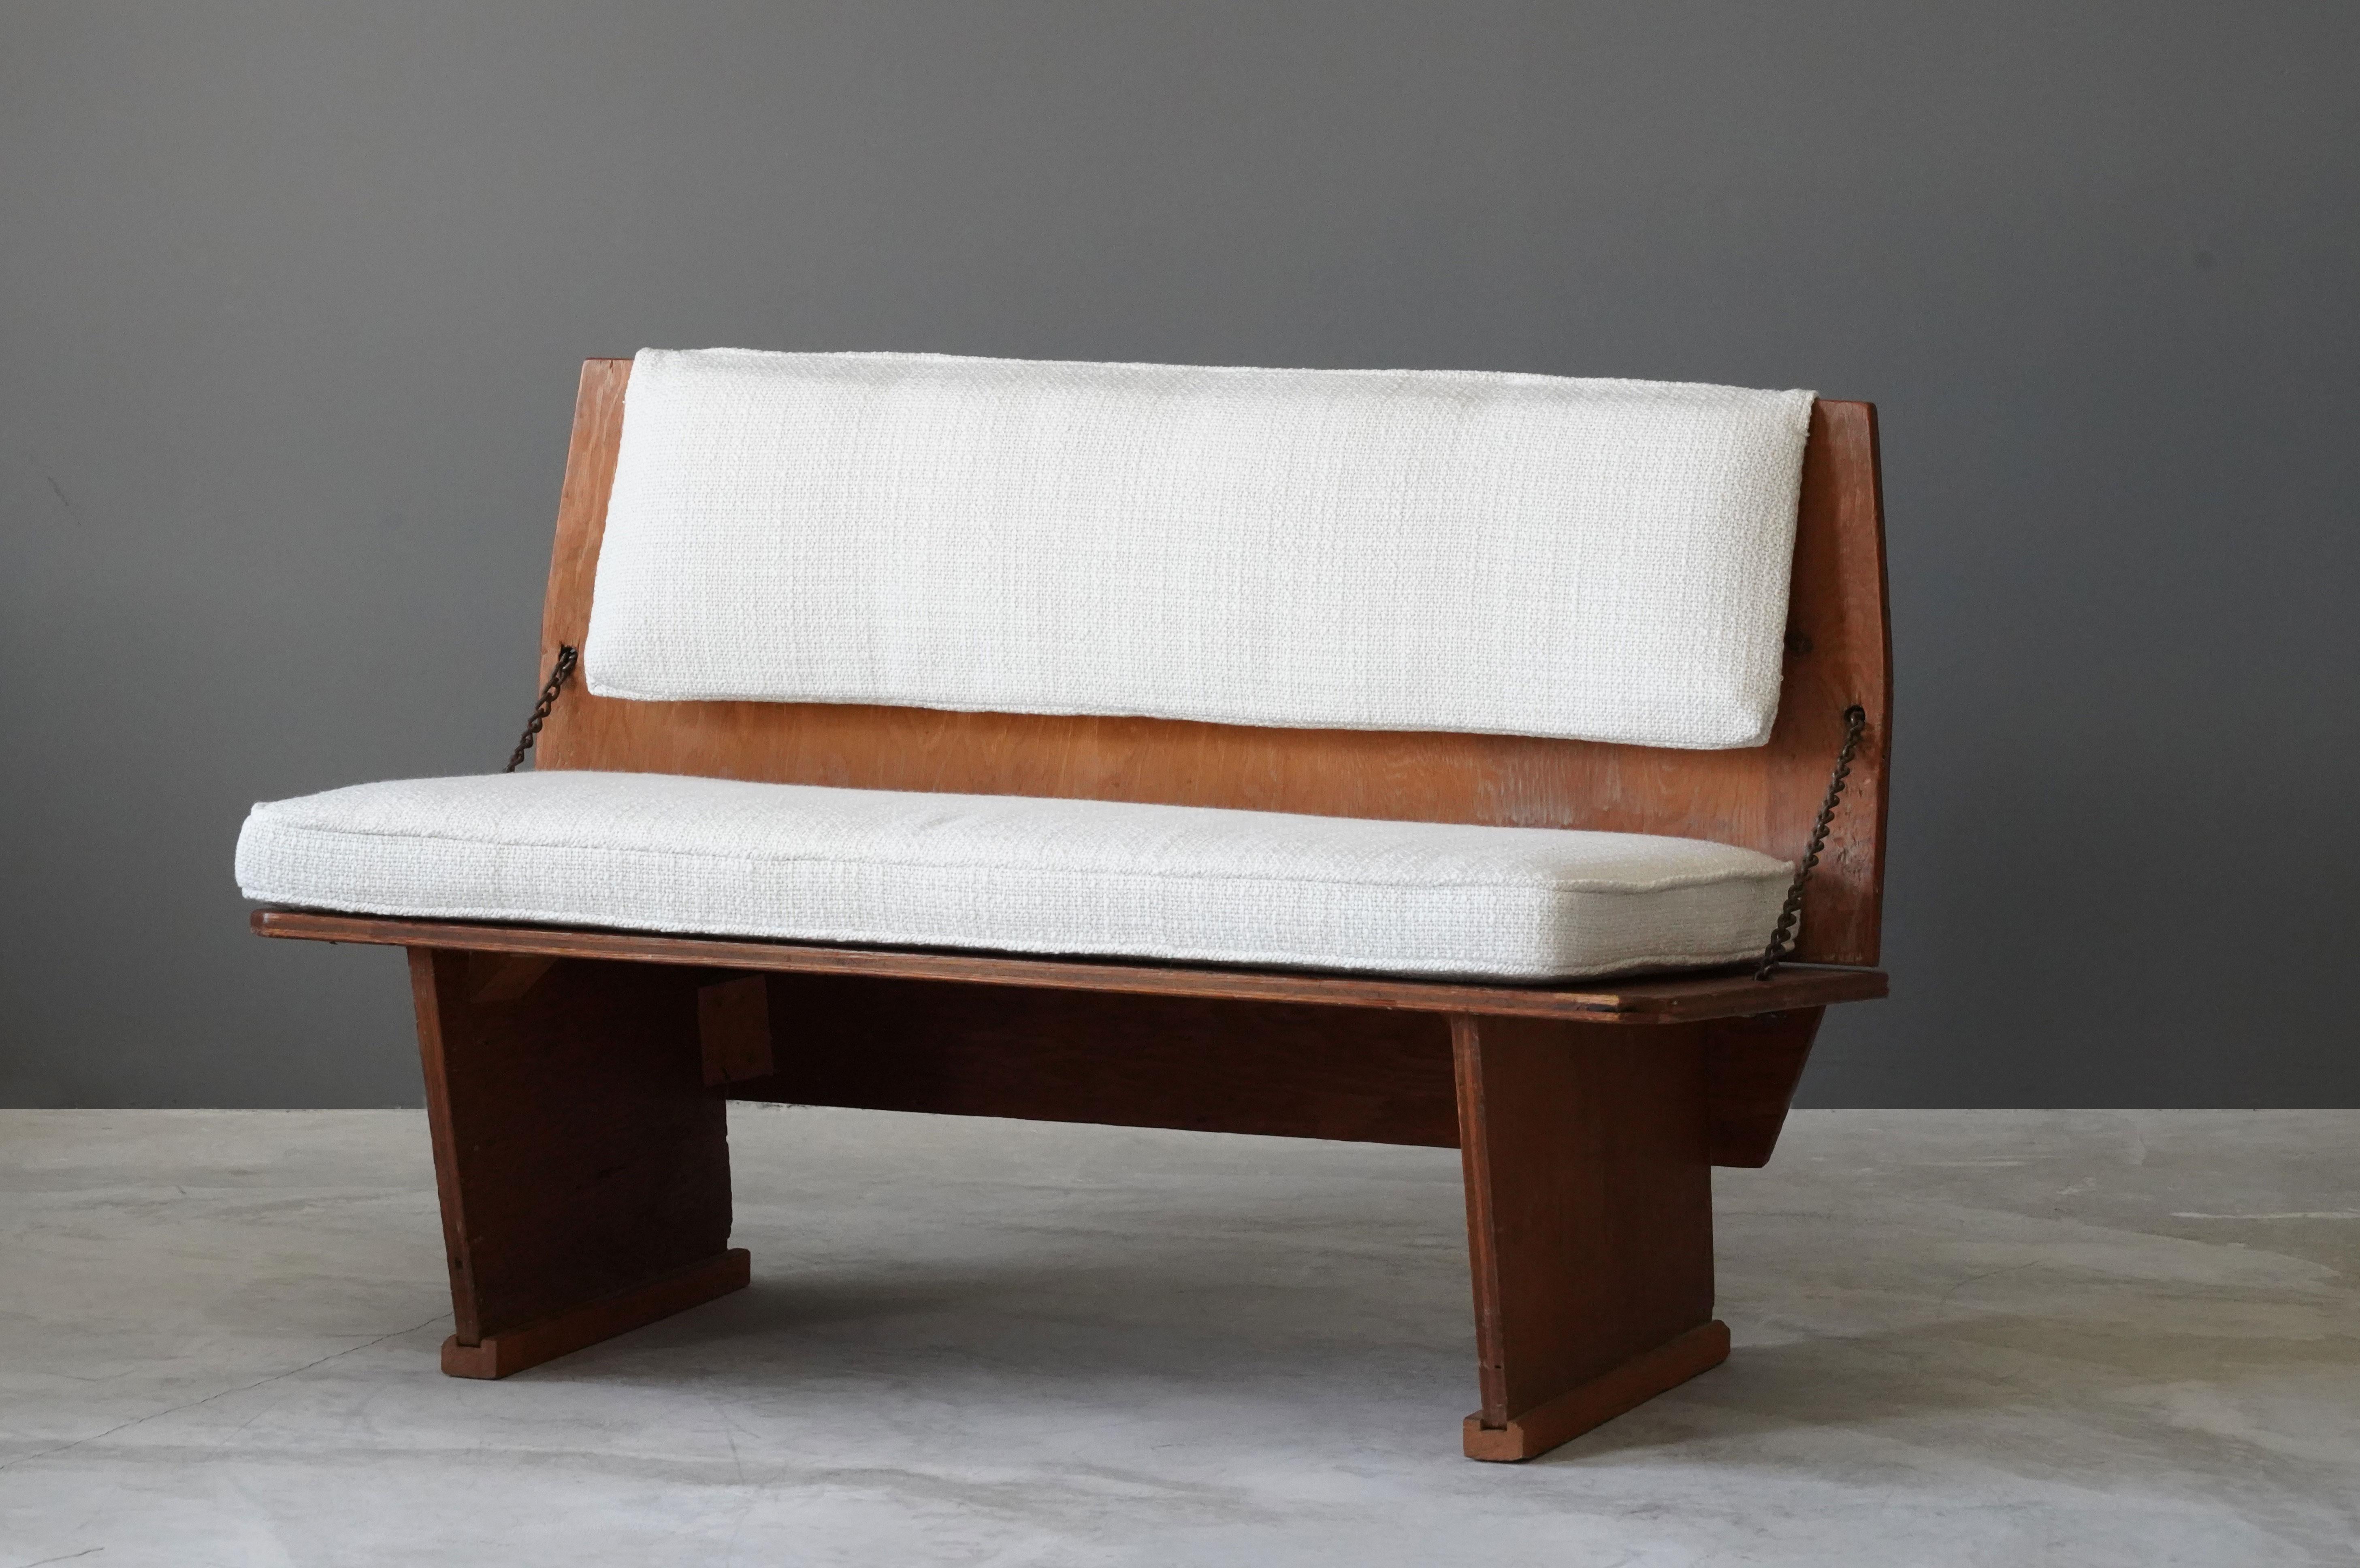 Mid-Century Modern Frank Lloyd Wright Bench from Unitarian Church, Pine Plywood, Steel, Fabric 1951